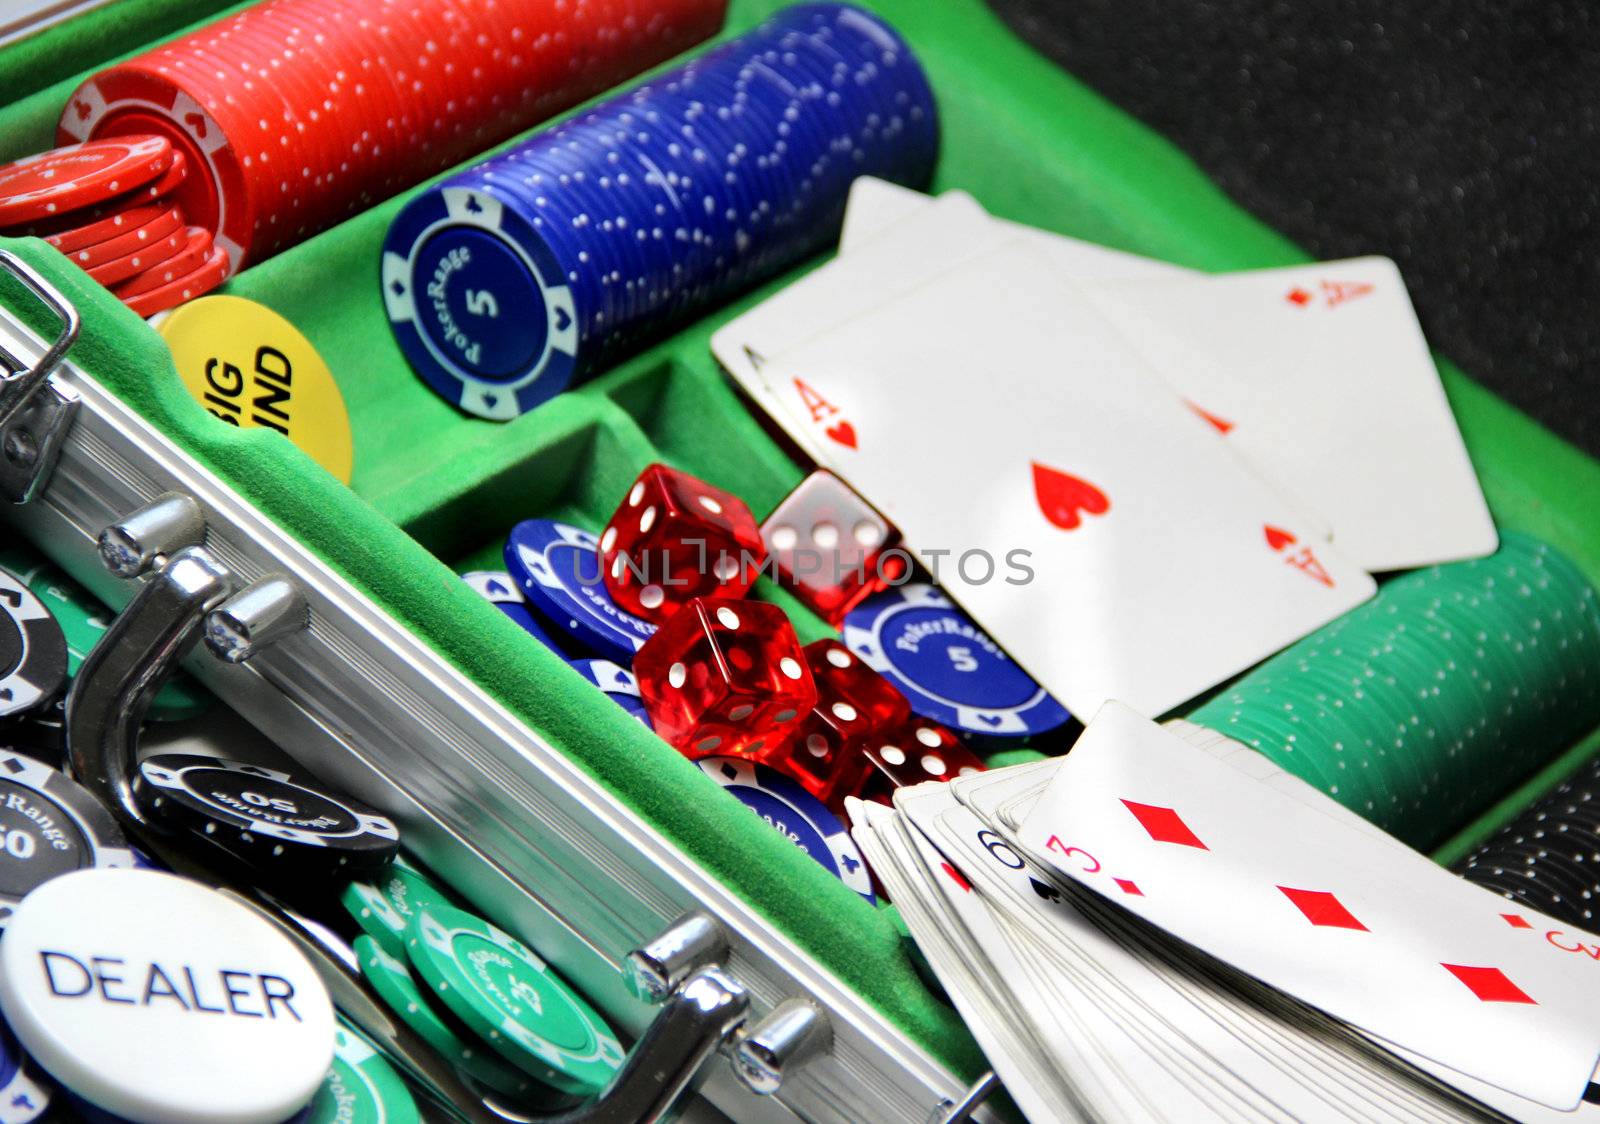 Poker set items